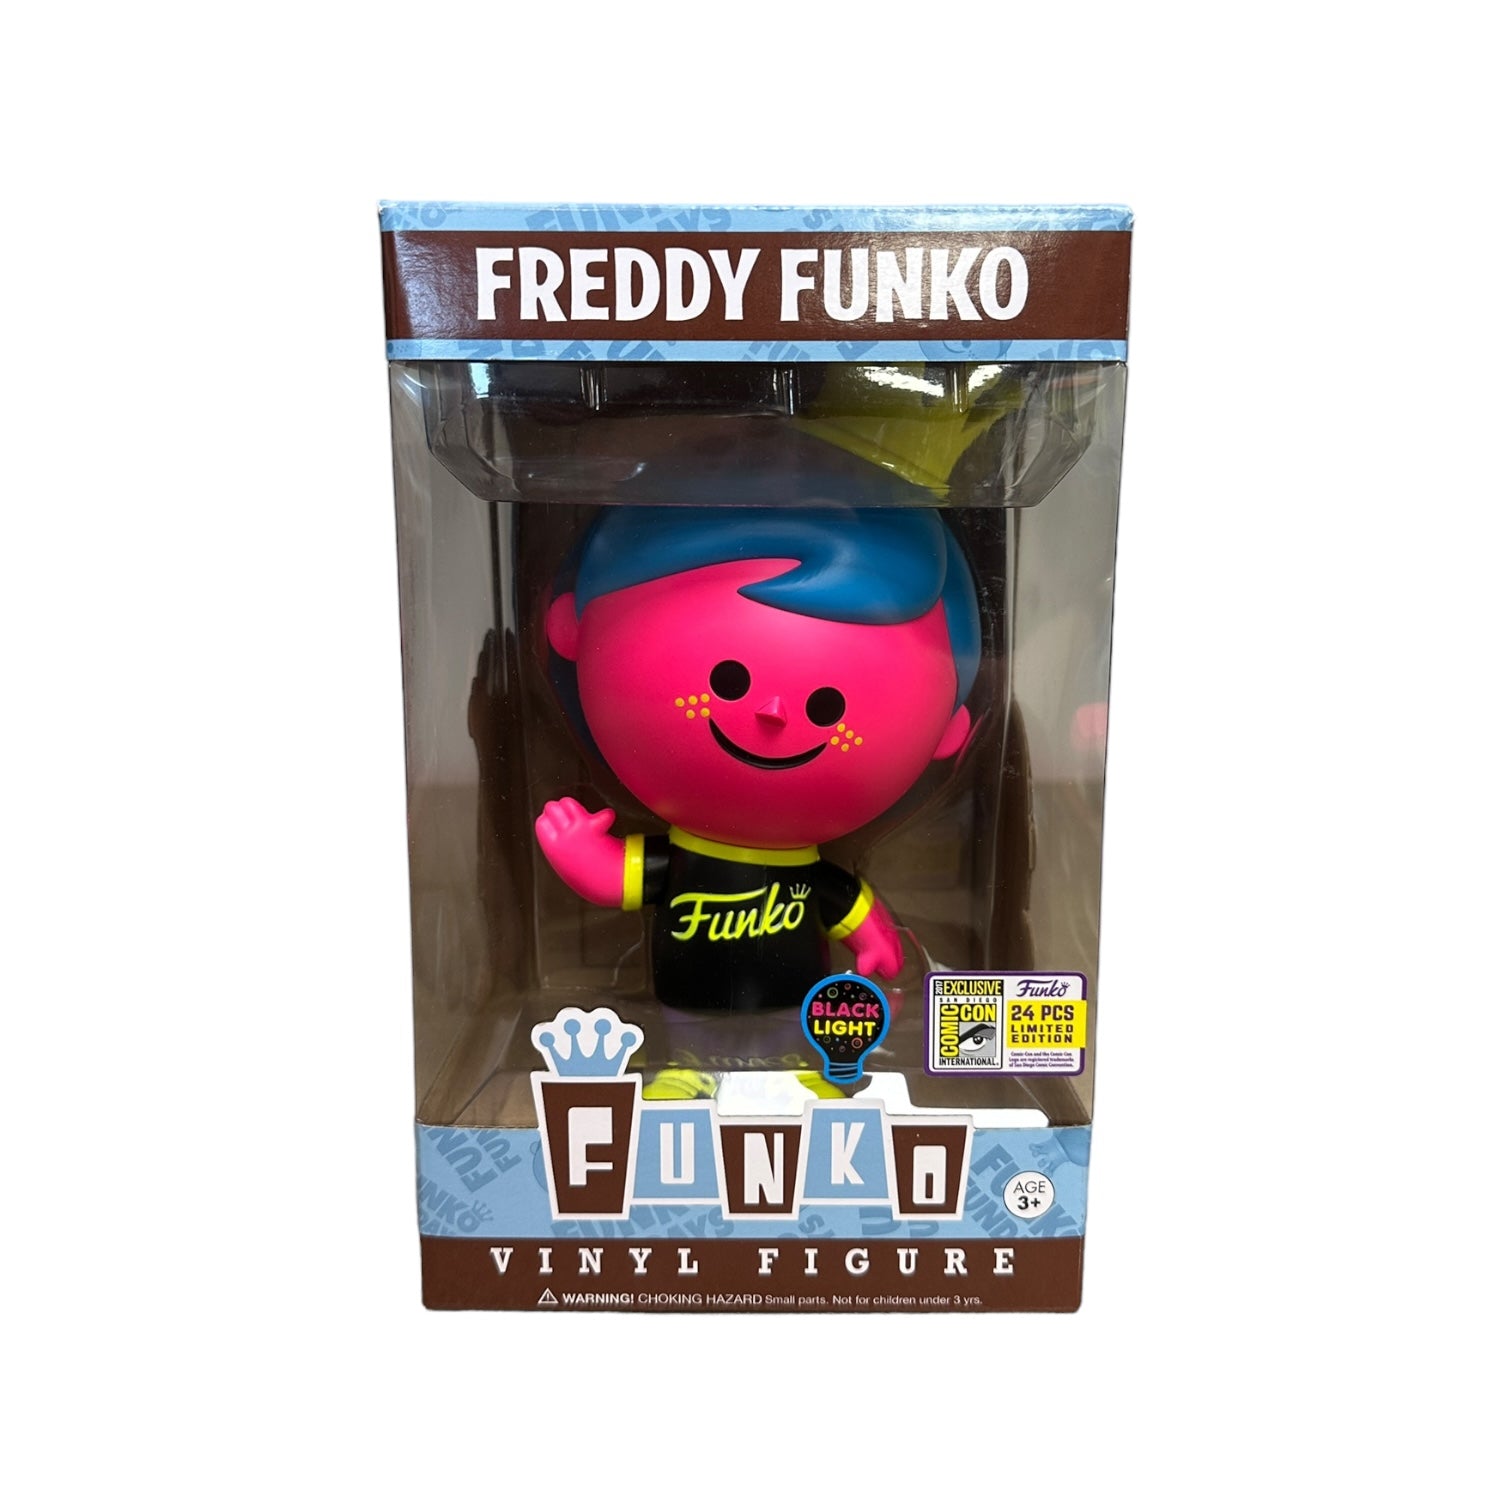 Freddy Funko Black Light (Pink & Black) Retro Vinyl Figure! - SDCC 2017 Exclusive LE24 Pcs - Condition 8.75/10